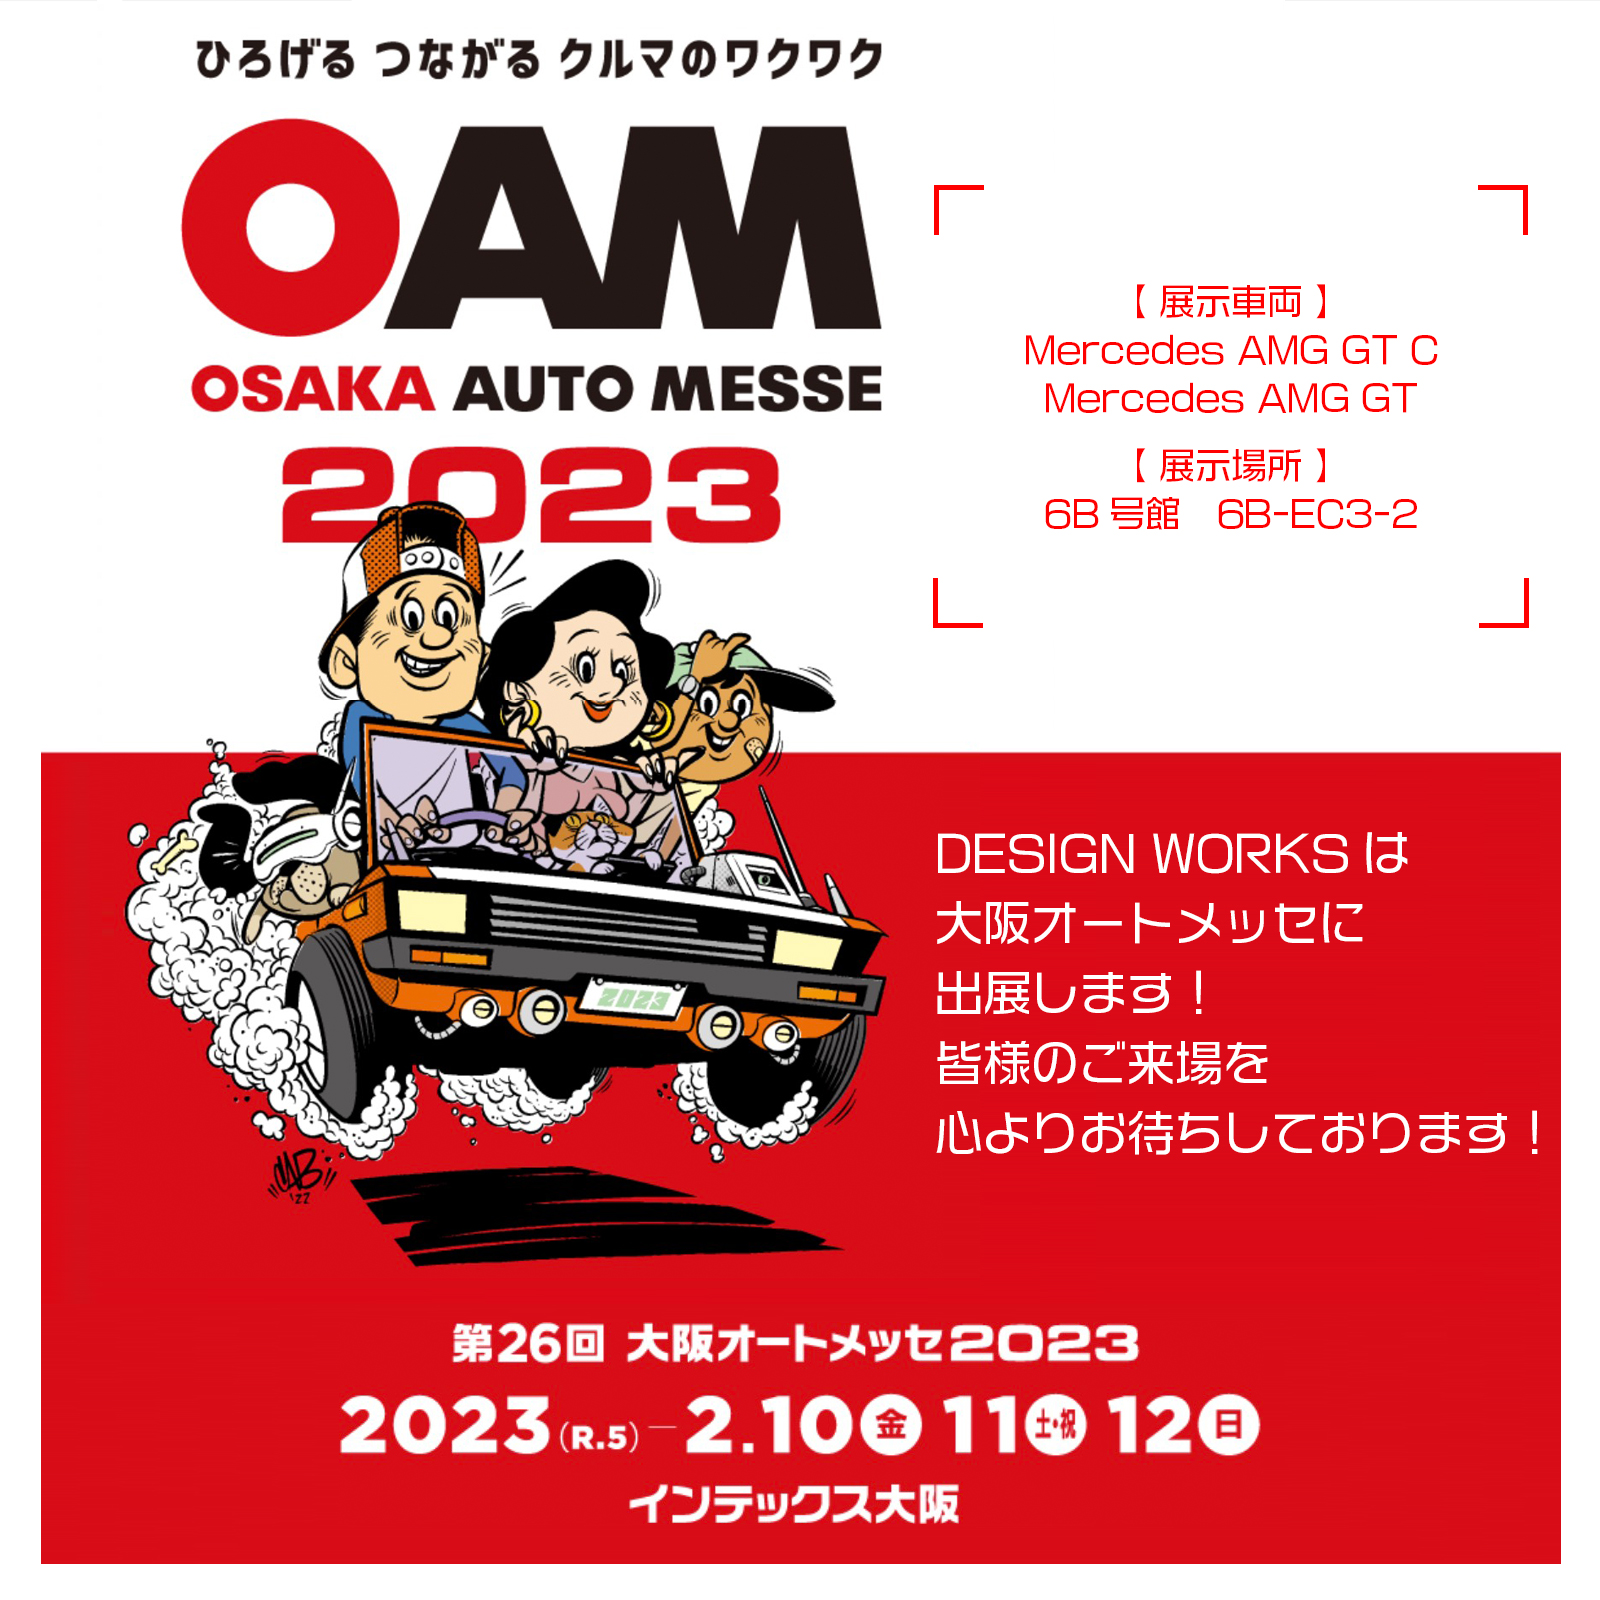 DESIGN WORKSは 東京オートサロン2023に出展します！
